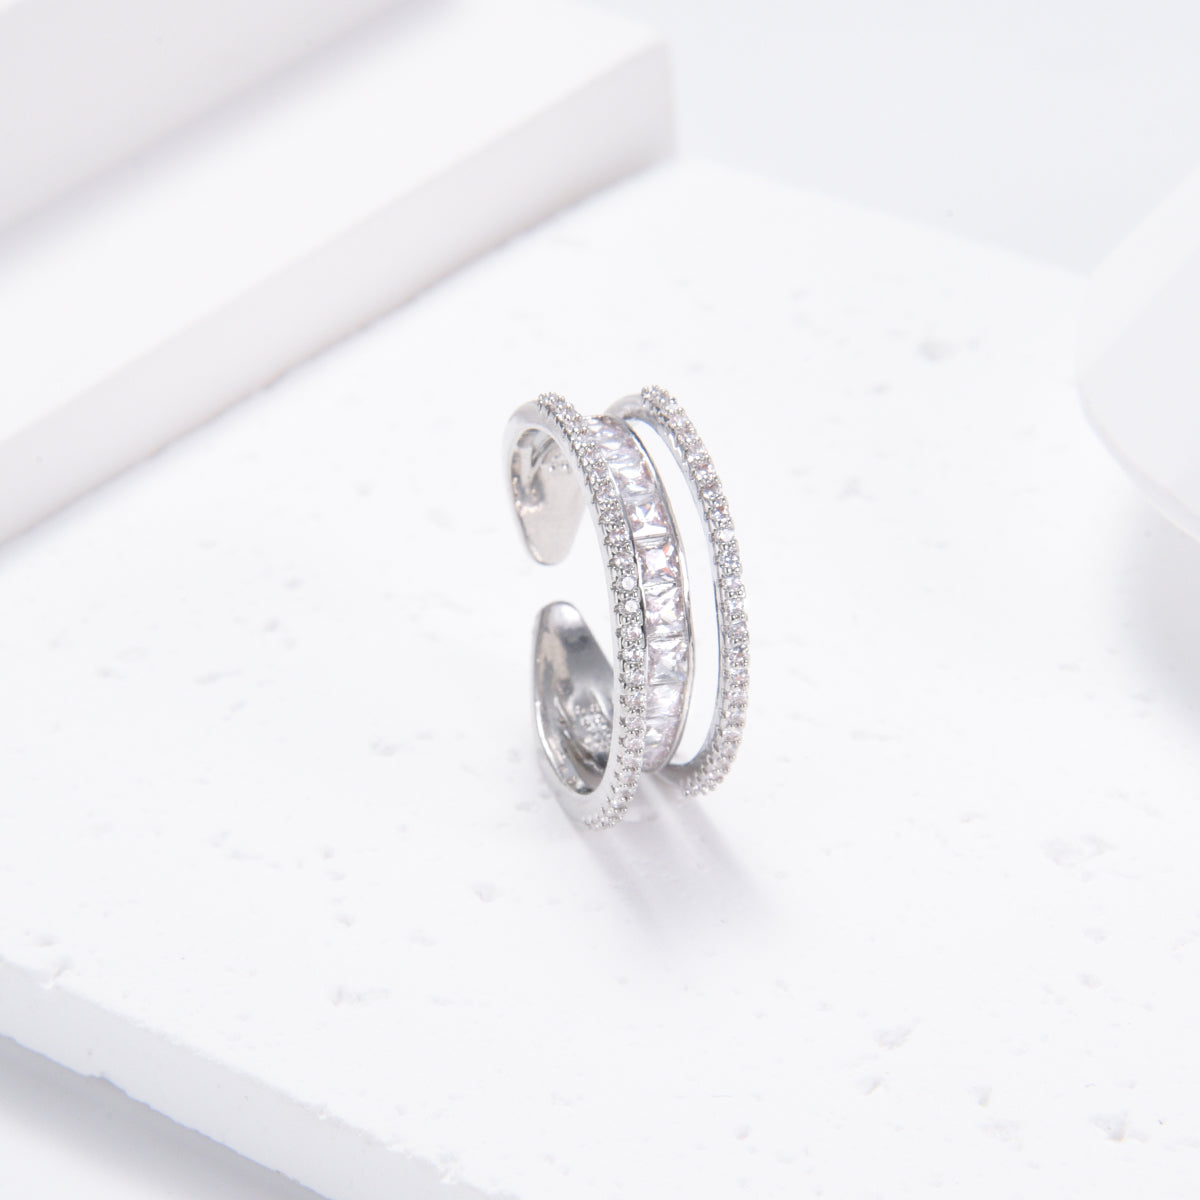 Glamorous 3-piece design ring with white gemstones